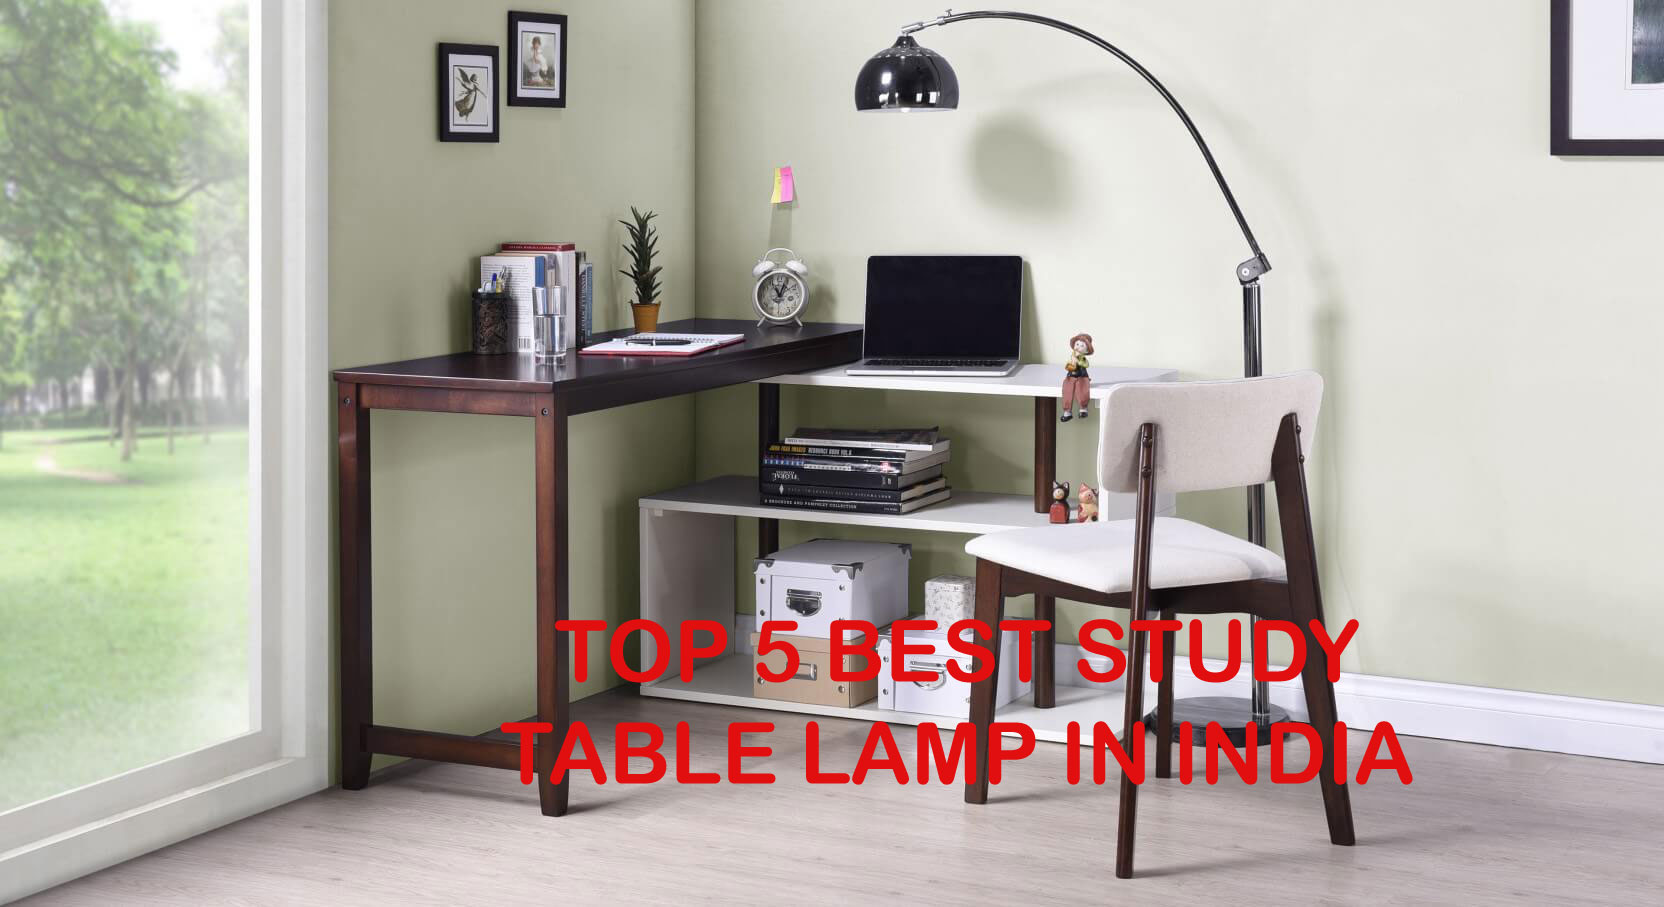 STUDY TABLE LAMP